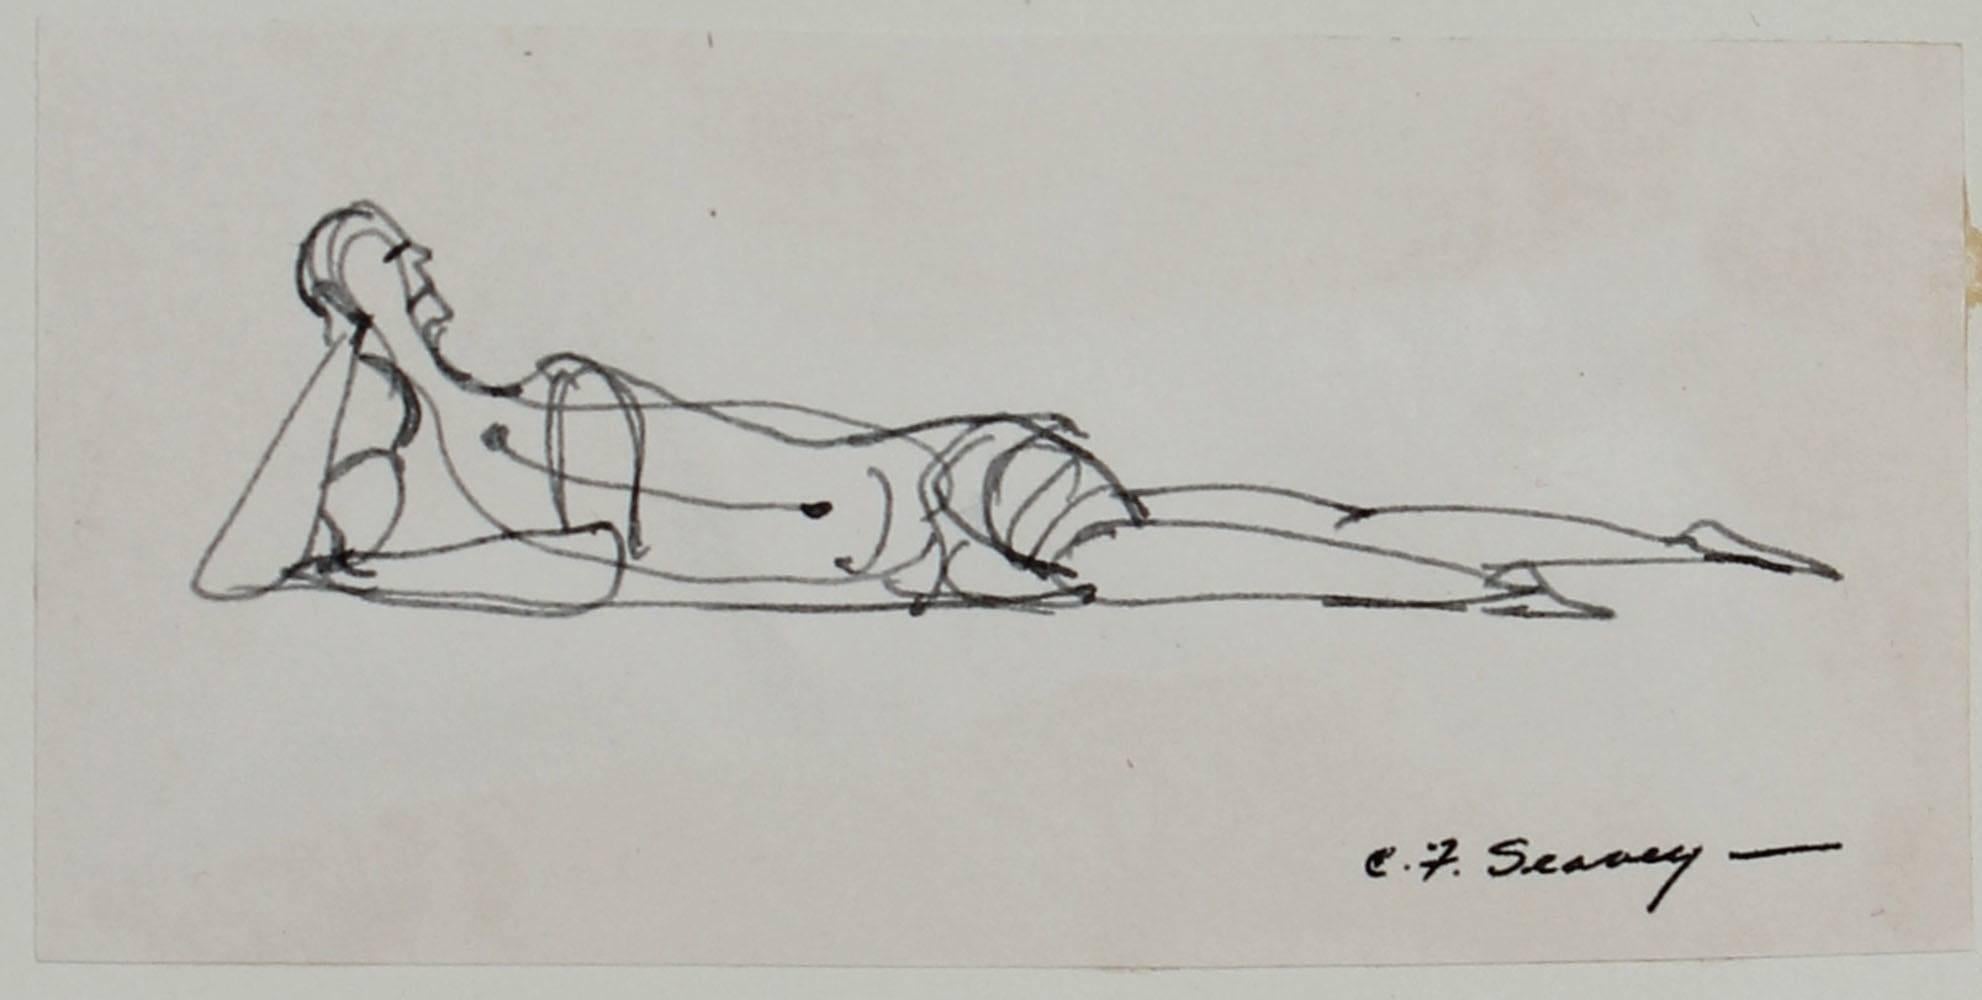 Clyde F. Seavey Sr. Figurative Art - Modernist Figurative Line Drawing in Ink, 1952